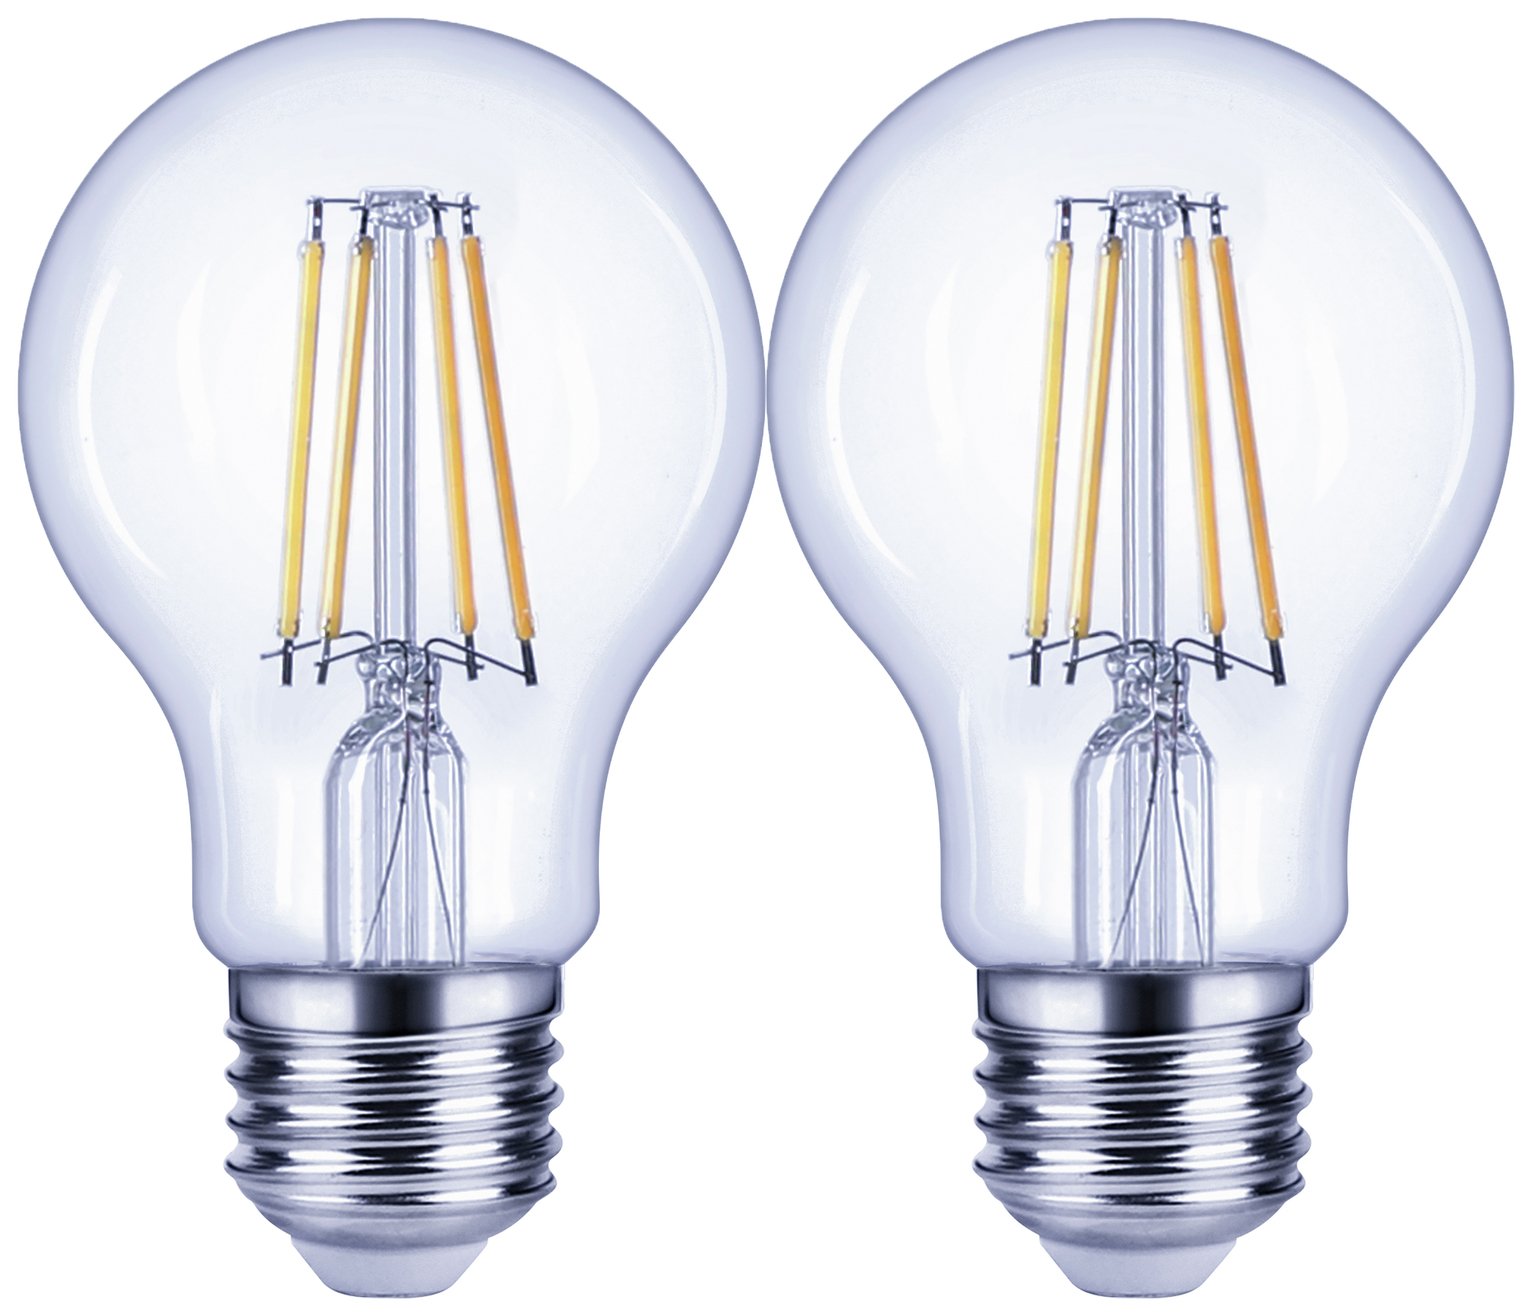 Argos Home 7.8W LED ES Light Bulb - 2 Pack